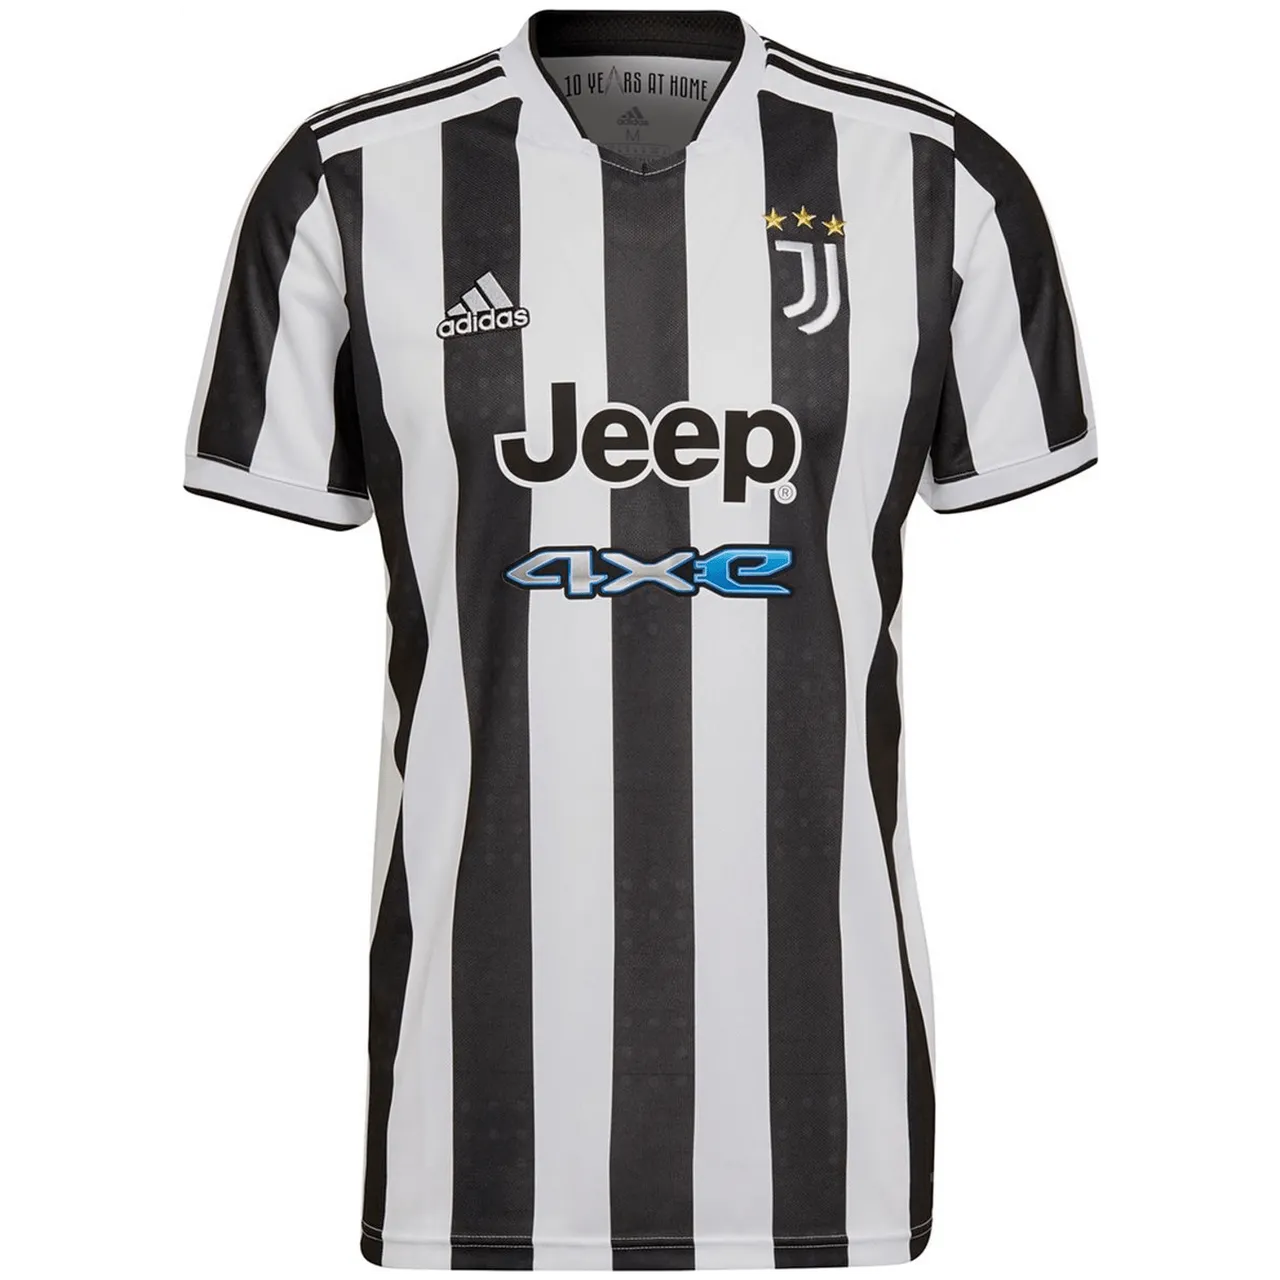 Adidas Juventus Turin 21/22 Heimtrikot Herren weiß